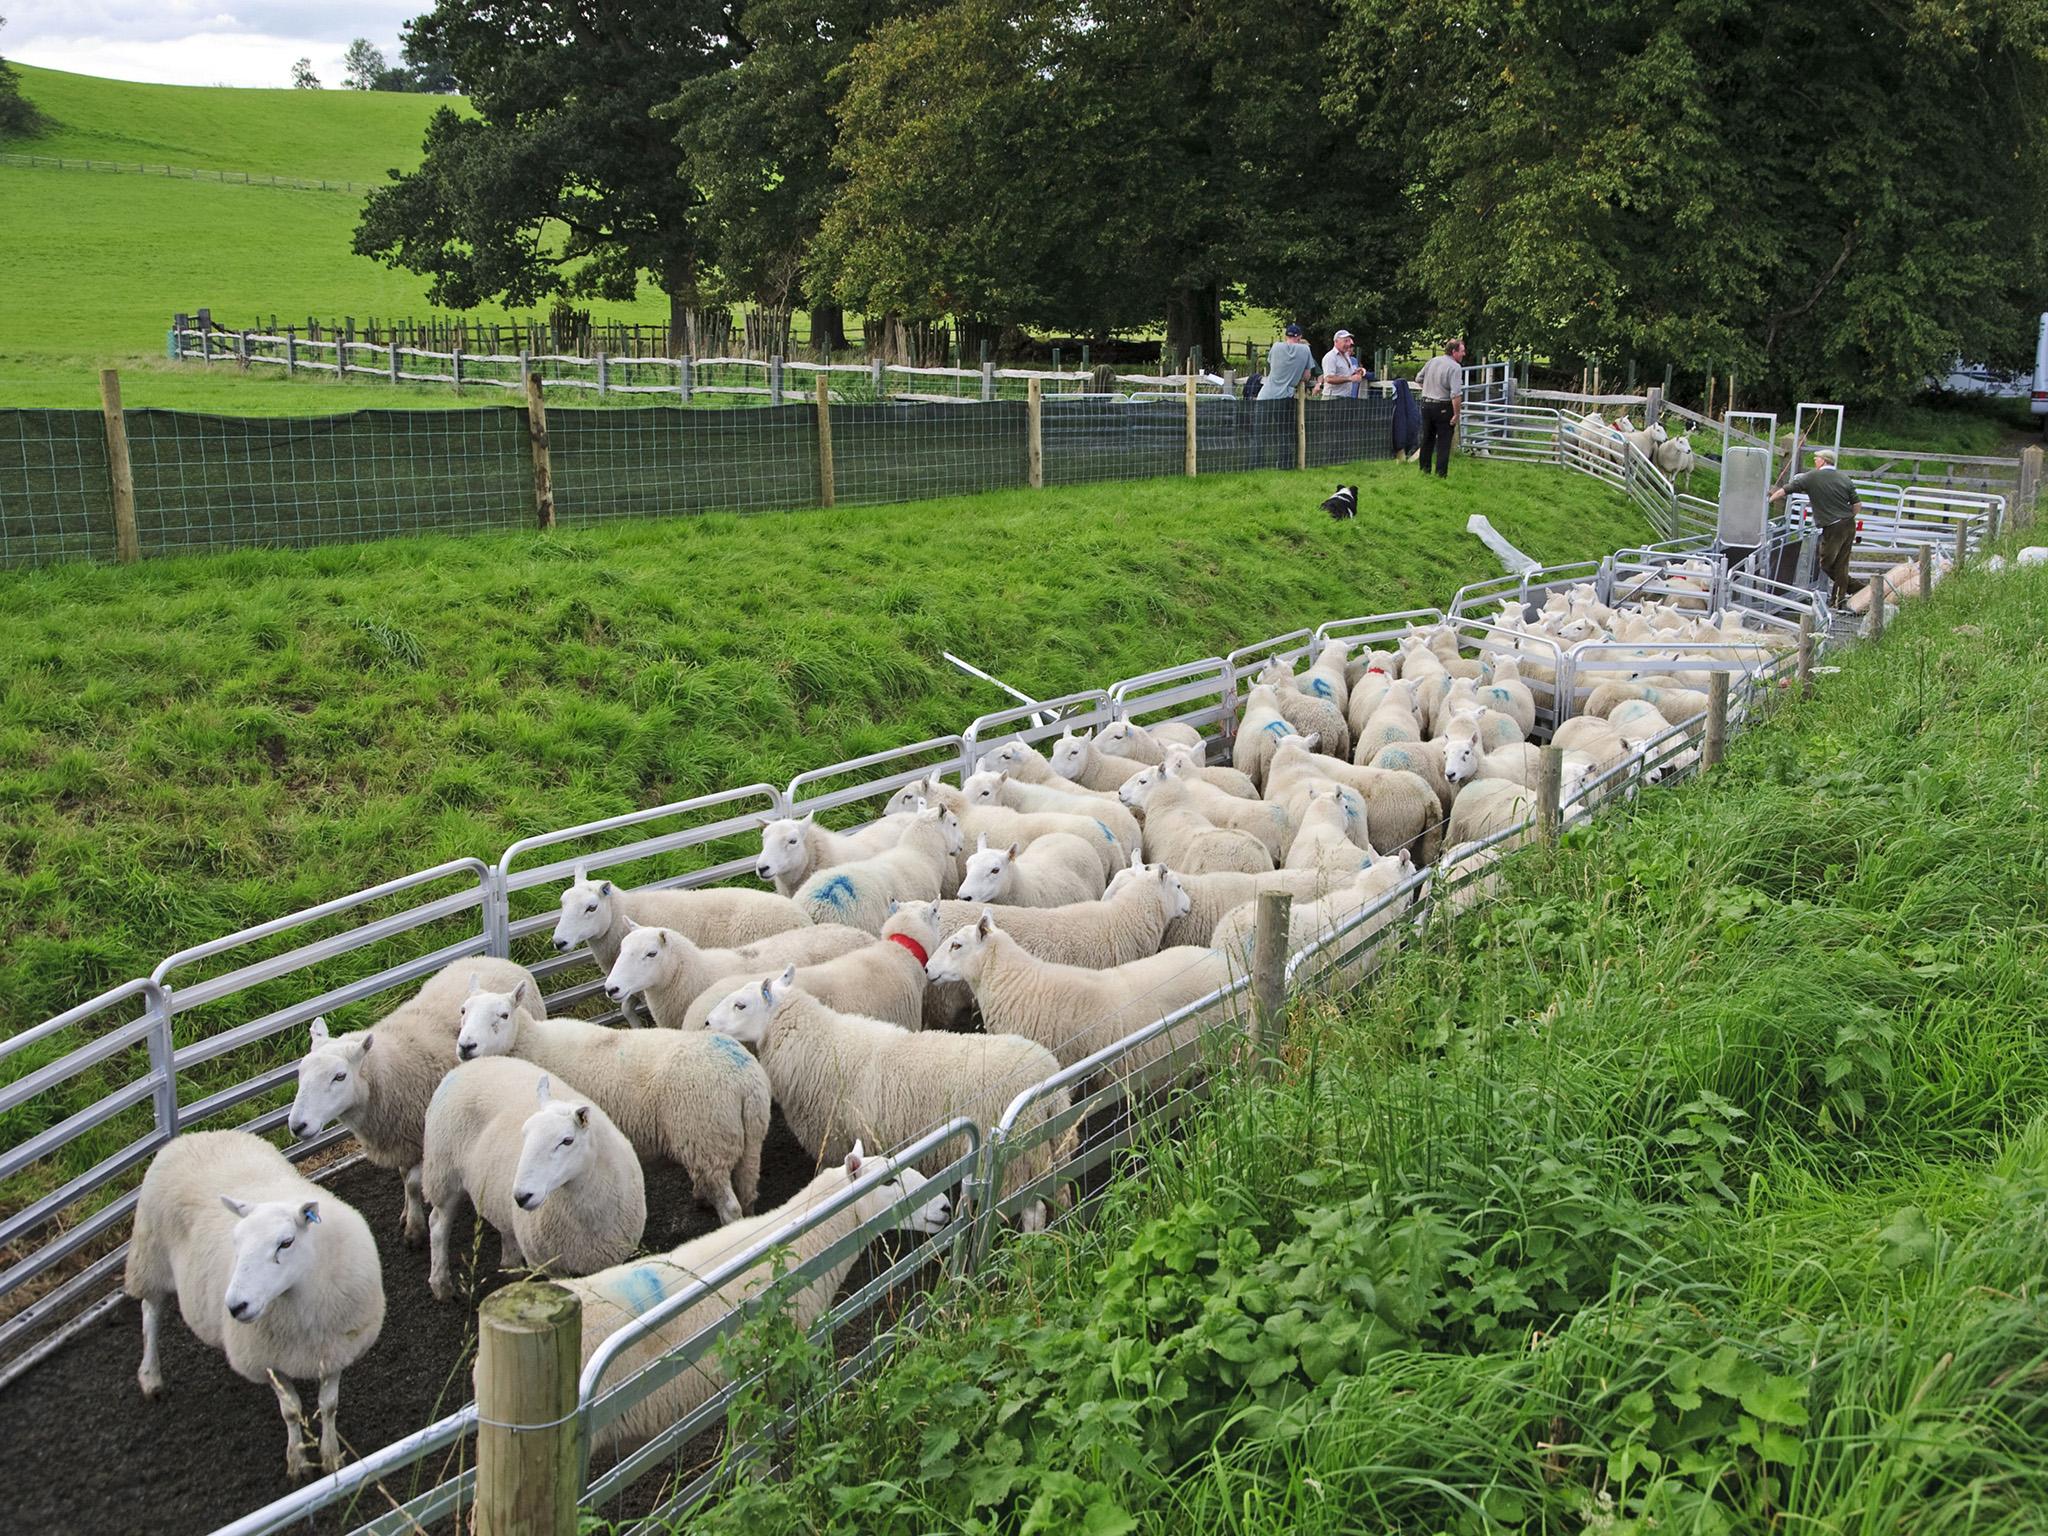 Sheep farming in the UK